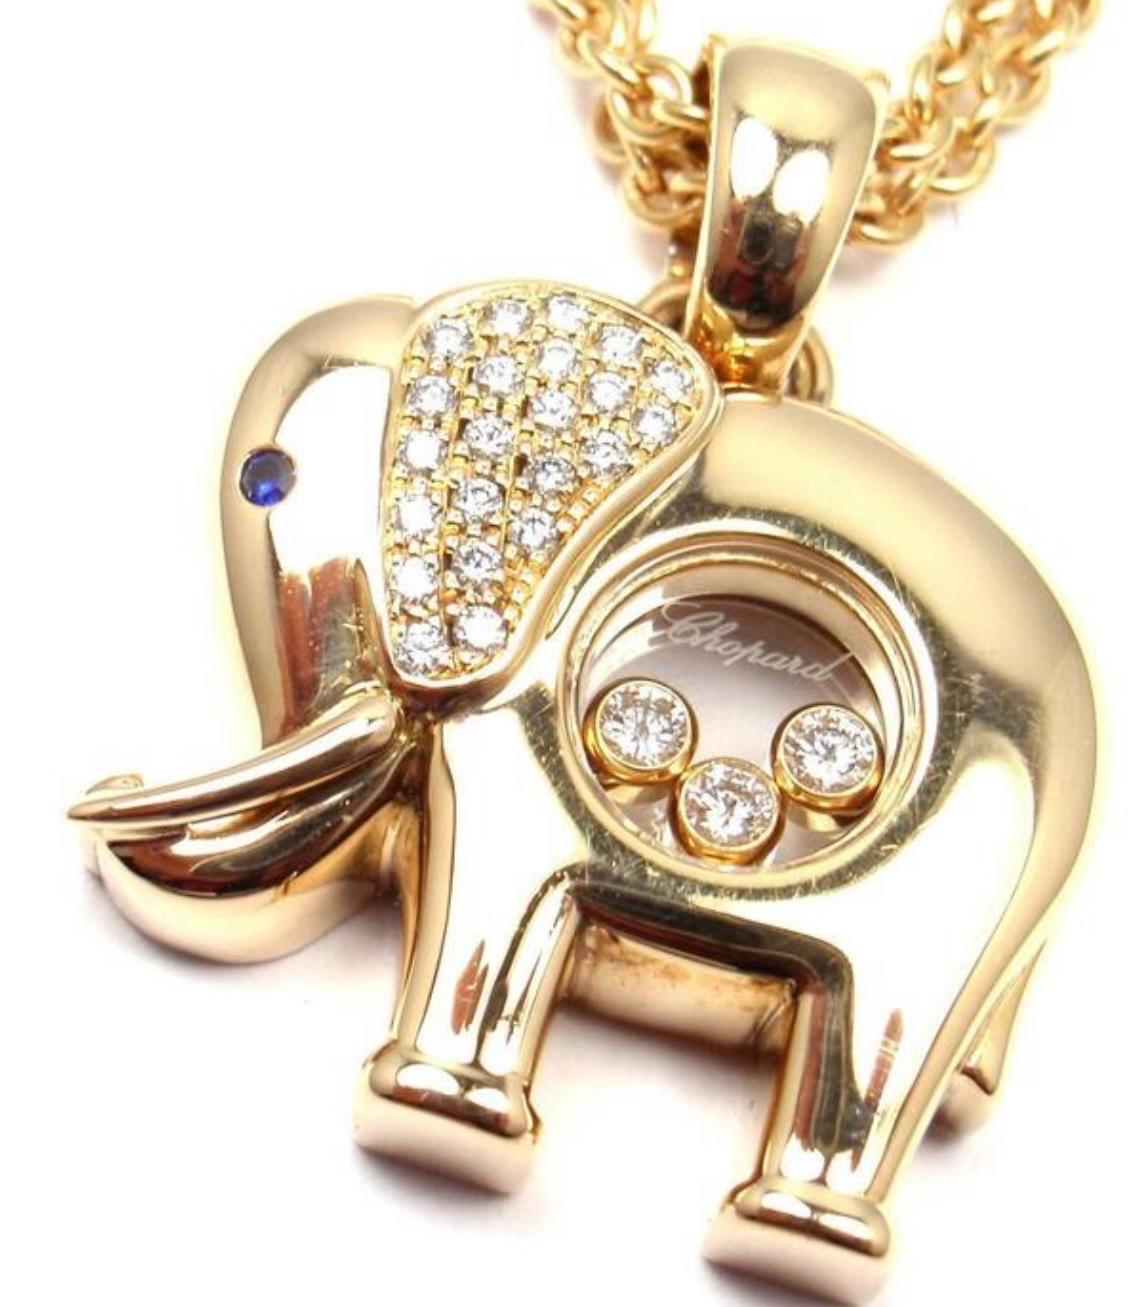 Designer Chopard 18K Yellow Gold Happy Diamond Eye Elephant Pendant
Chopard Happy Diamond 18K Yellow Gold , 3 Floating Diamond 
Estimated Retail Price: $6500
Authenticity, Hallmark #9181256      79/1831/20   , Chopard , 750
High polish finish
comes